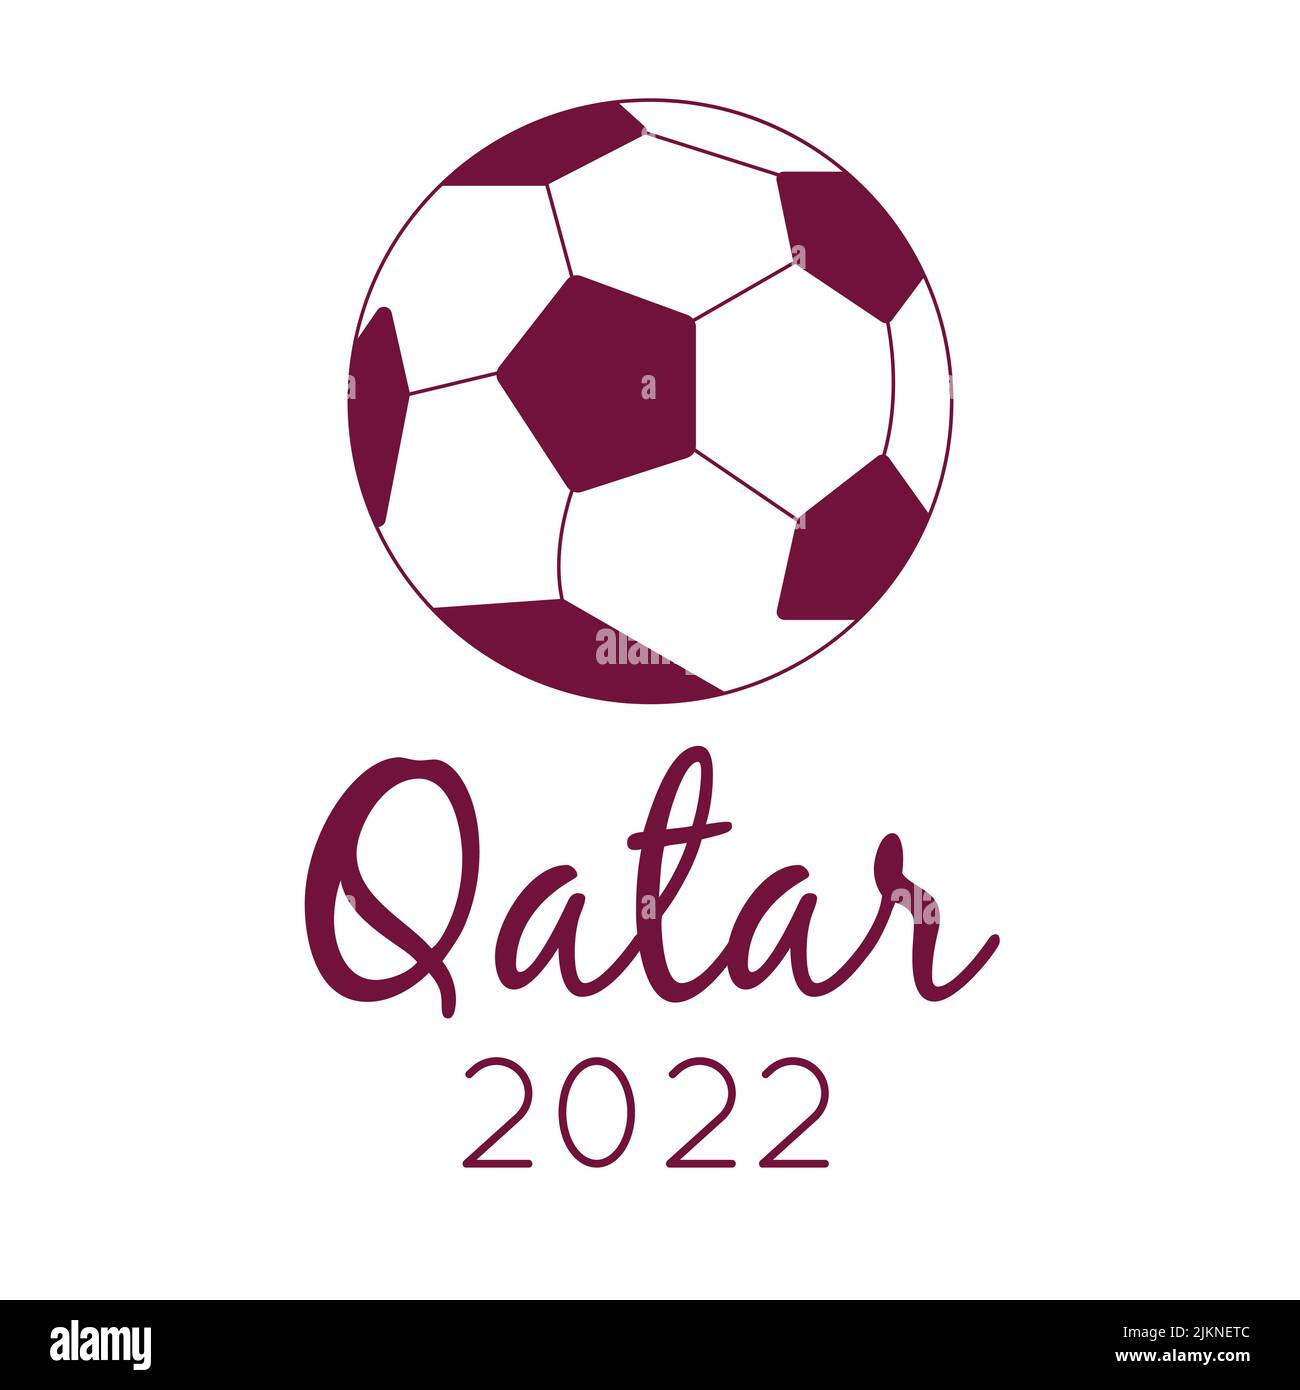 Qatar 2022 football world cup emblem Stock Vector Images - Alamy